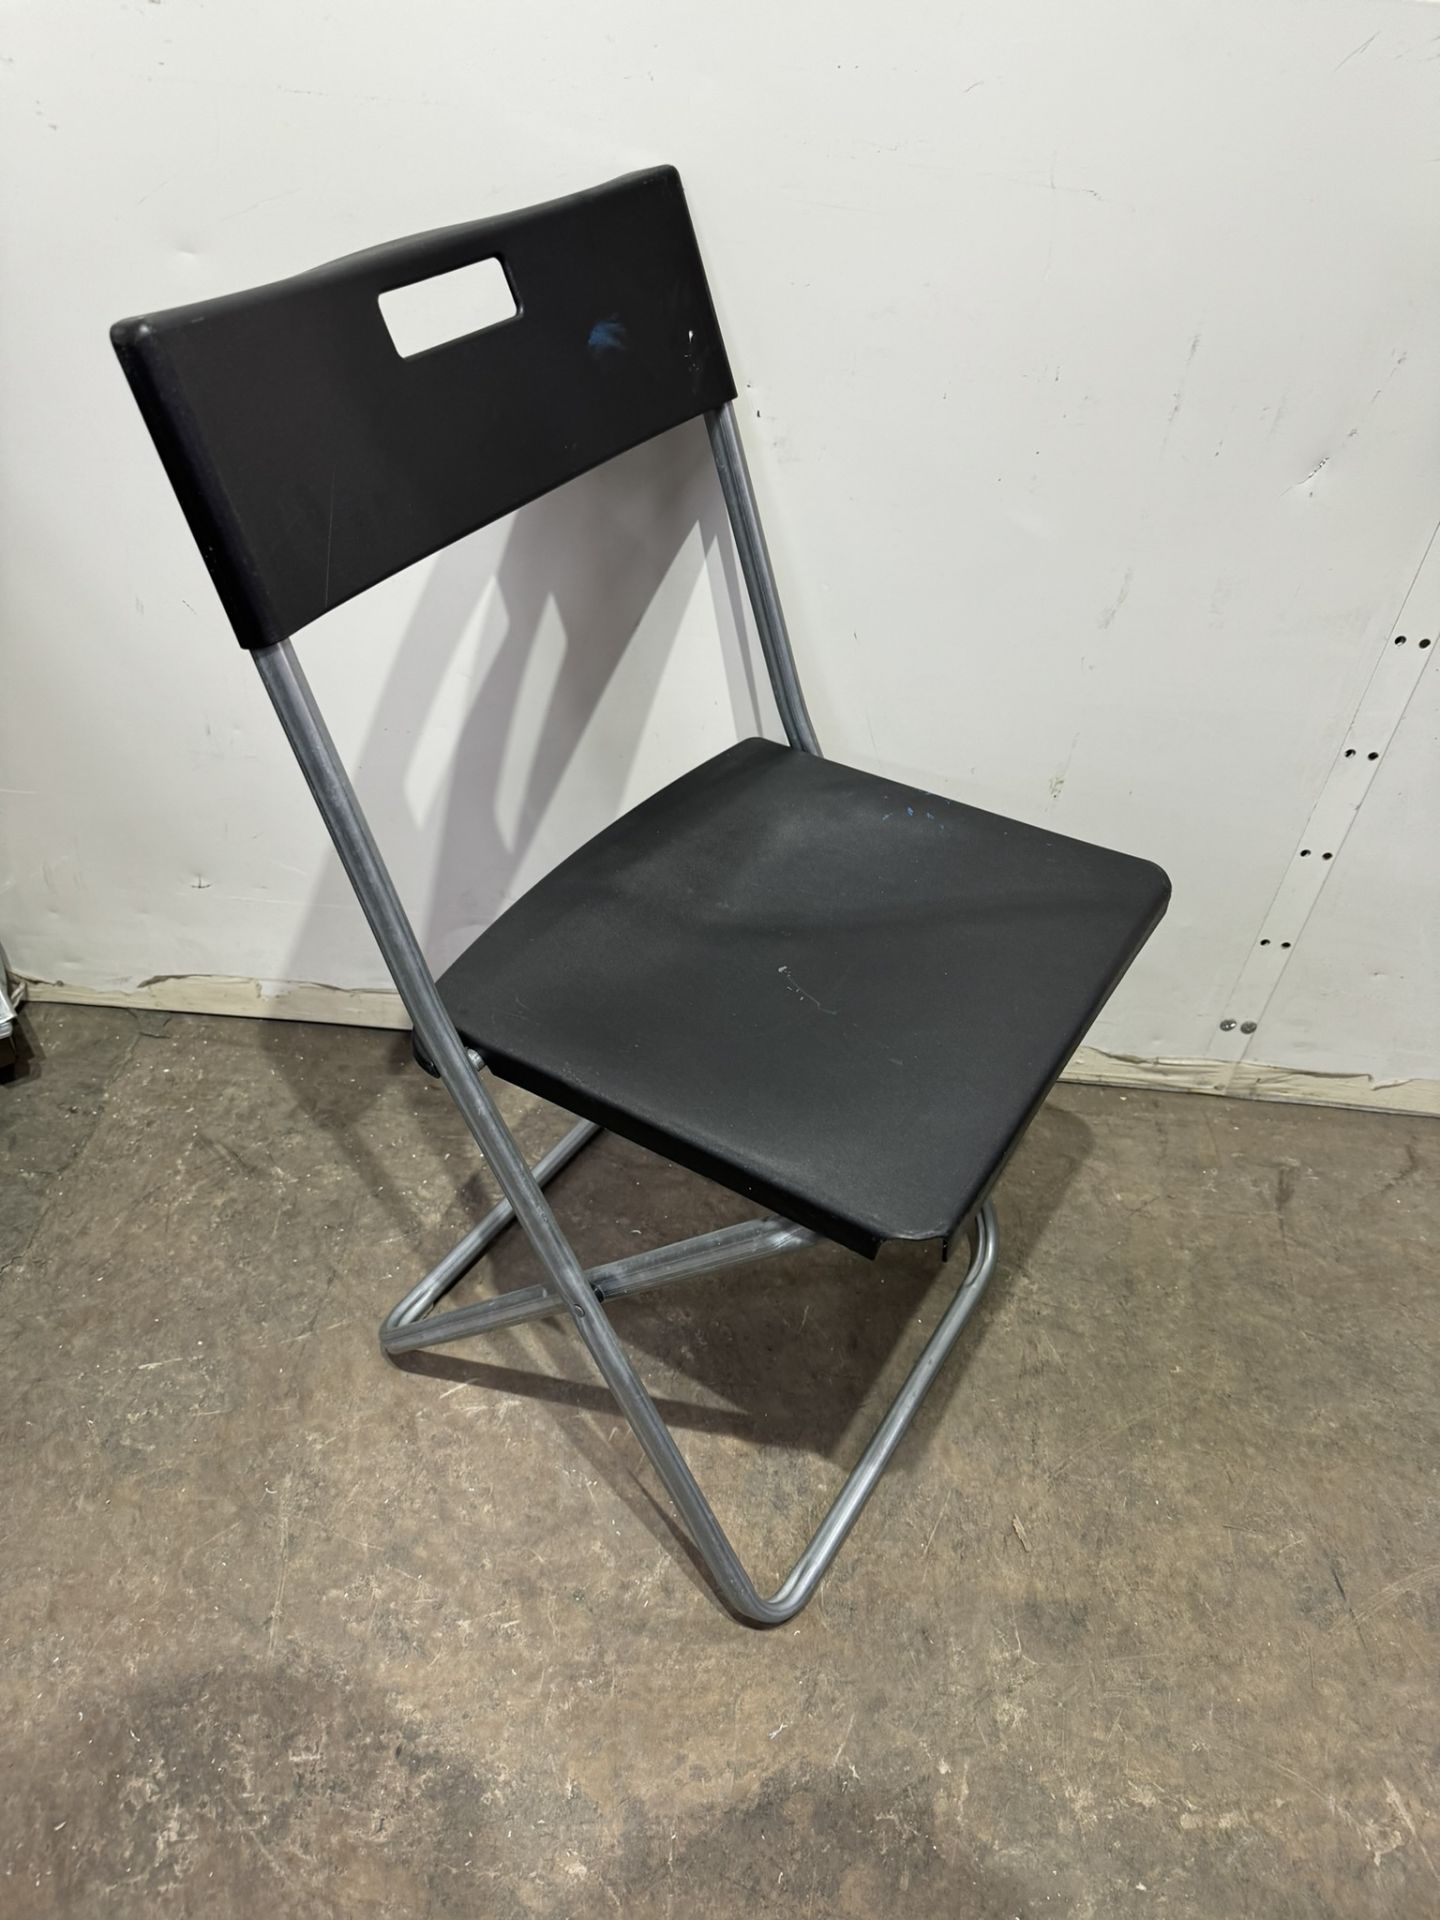 7 x Ikea Gunde Black Foldable Chairs - Image 2 of 3